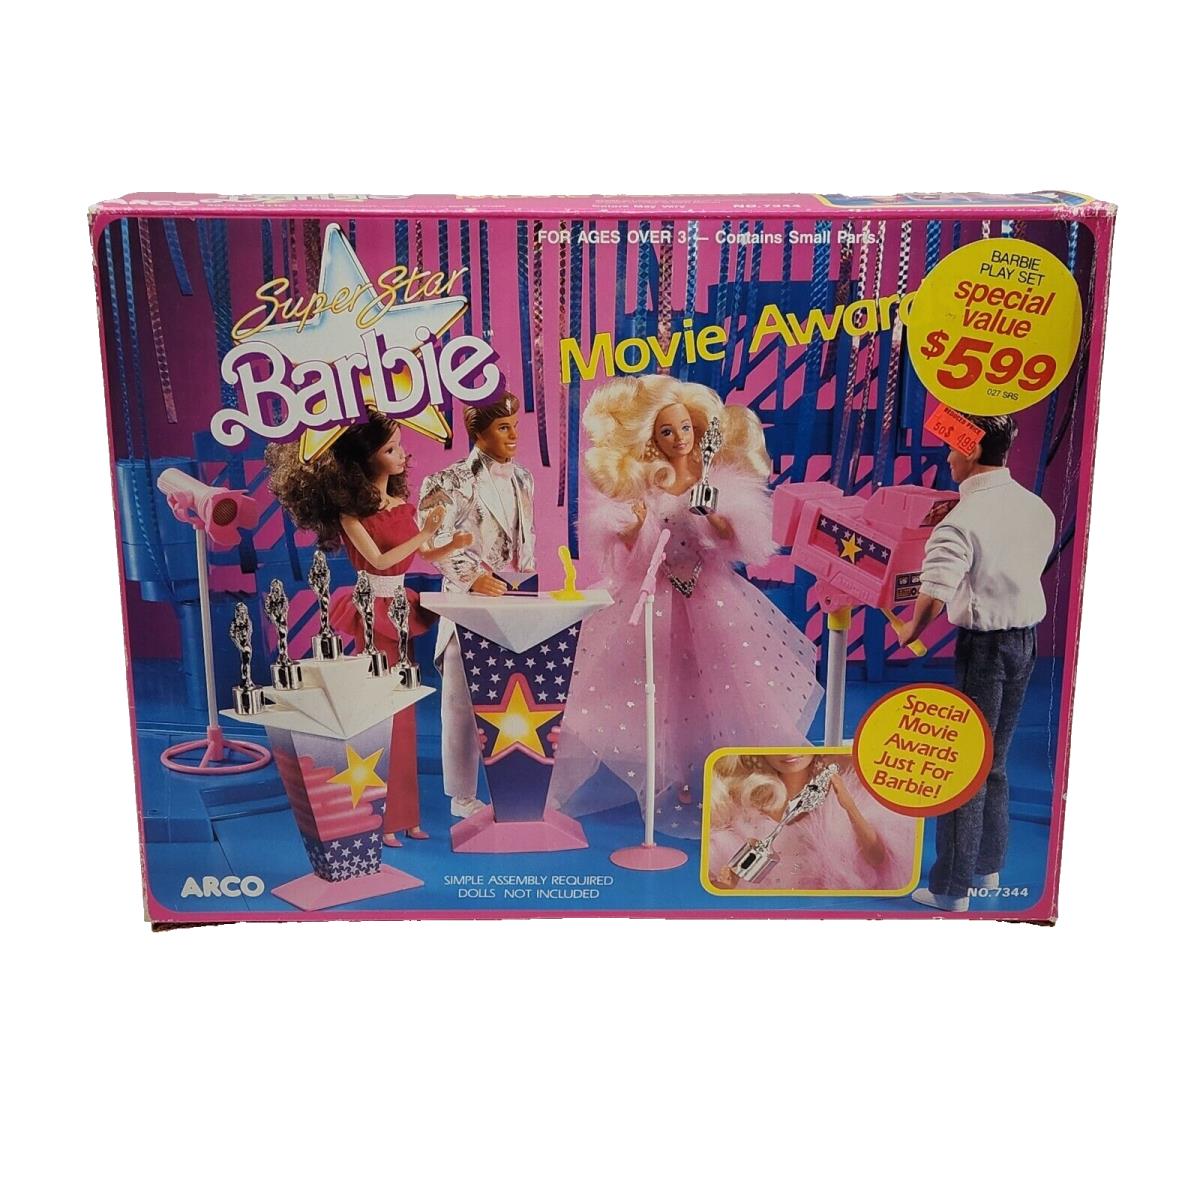 Vintage 1988 Arco Super Star Barbie Movie Awards 7344 Complete